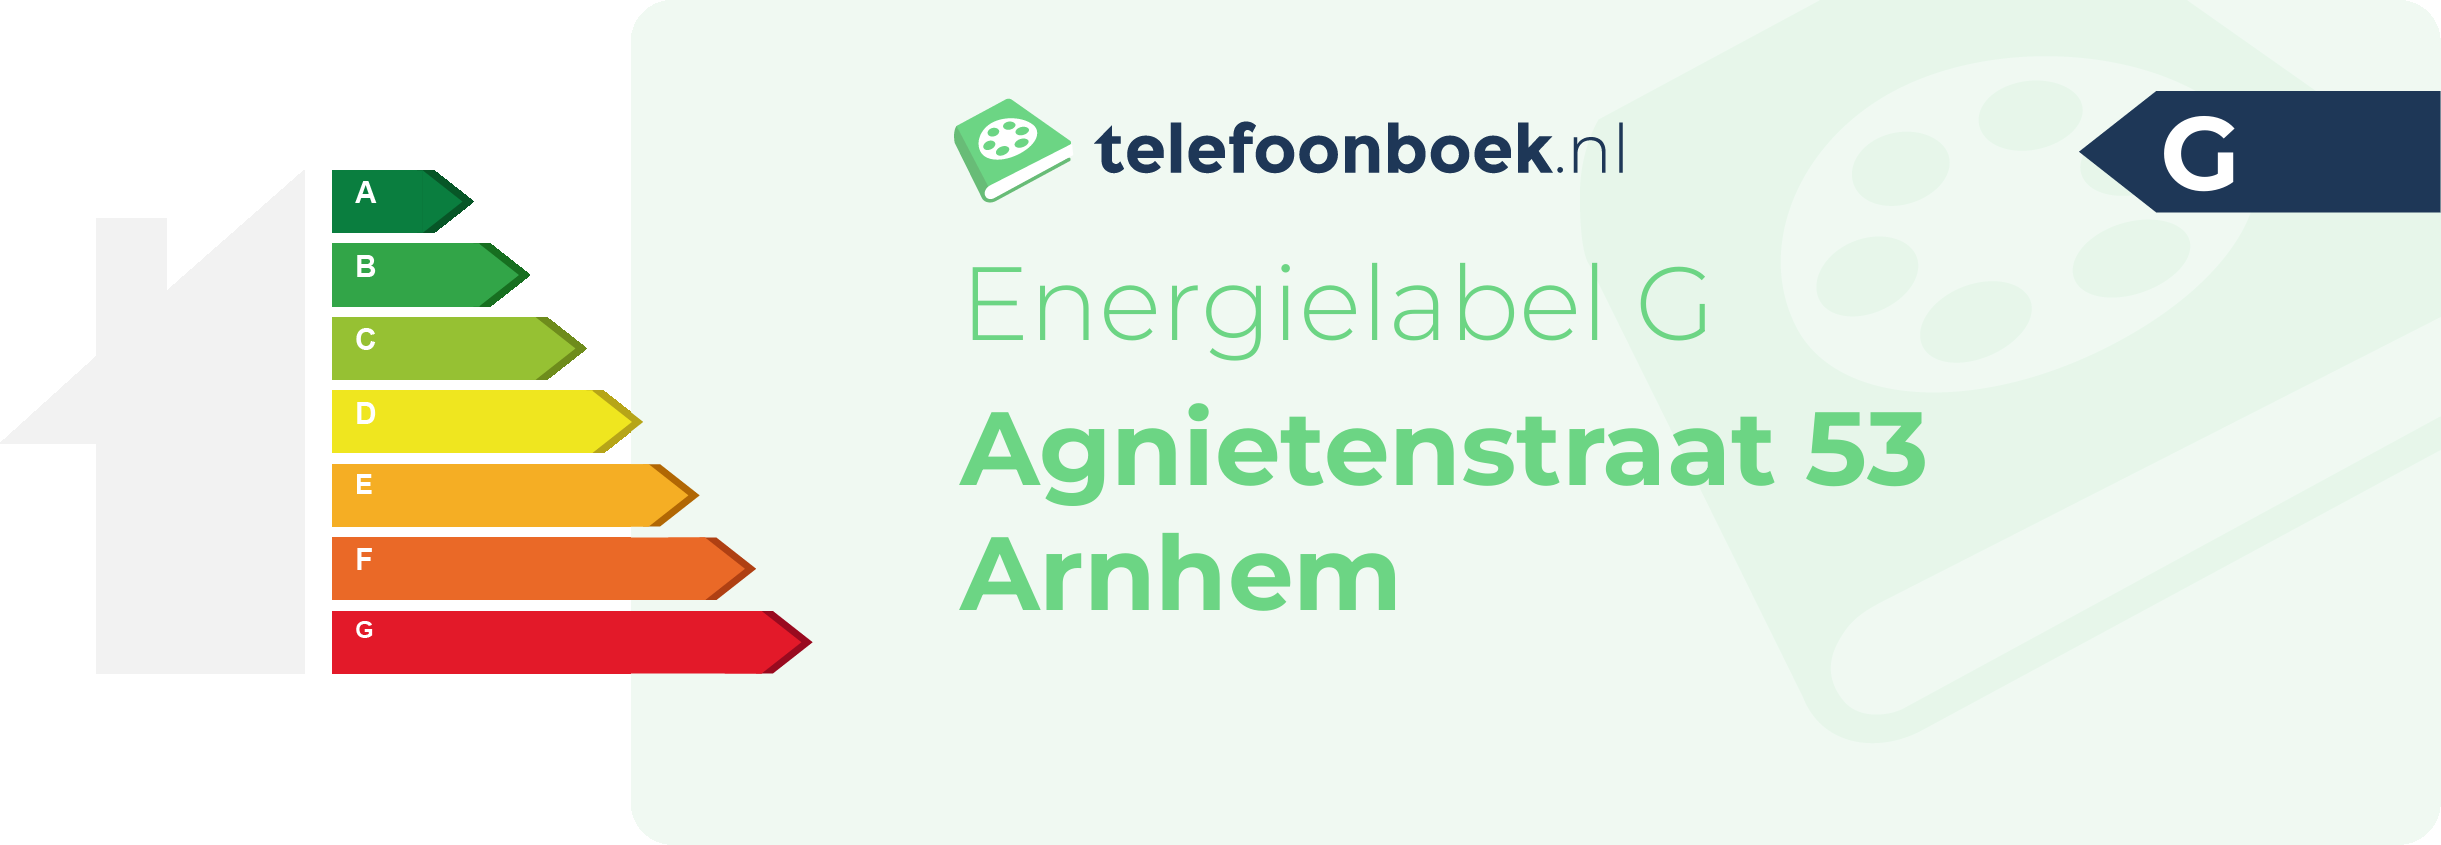 Energielabel Agnietenstraat 53 Arnhem